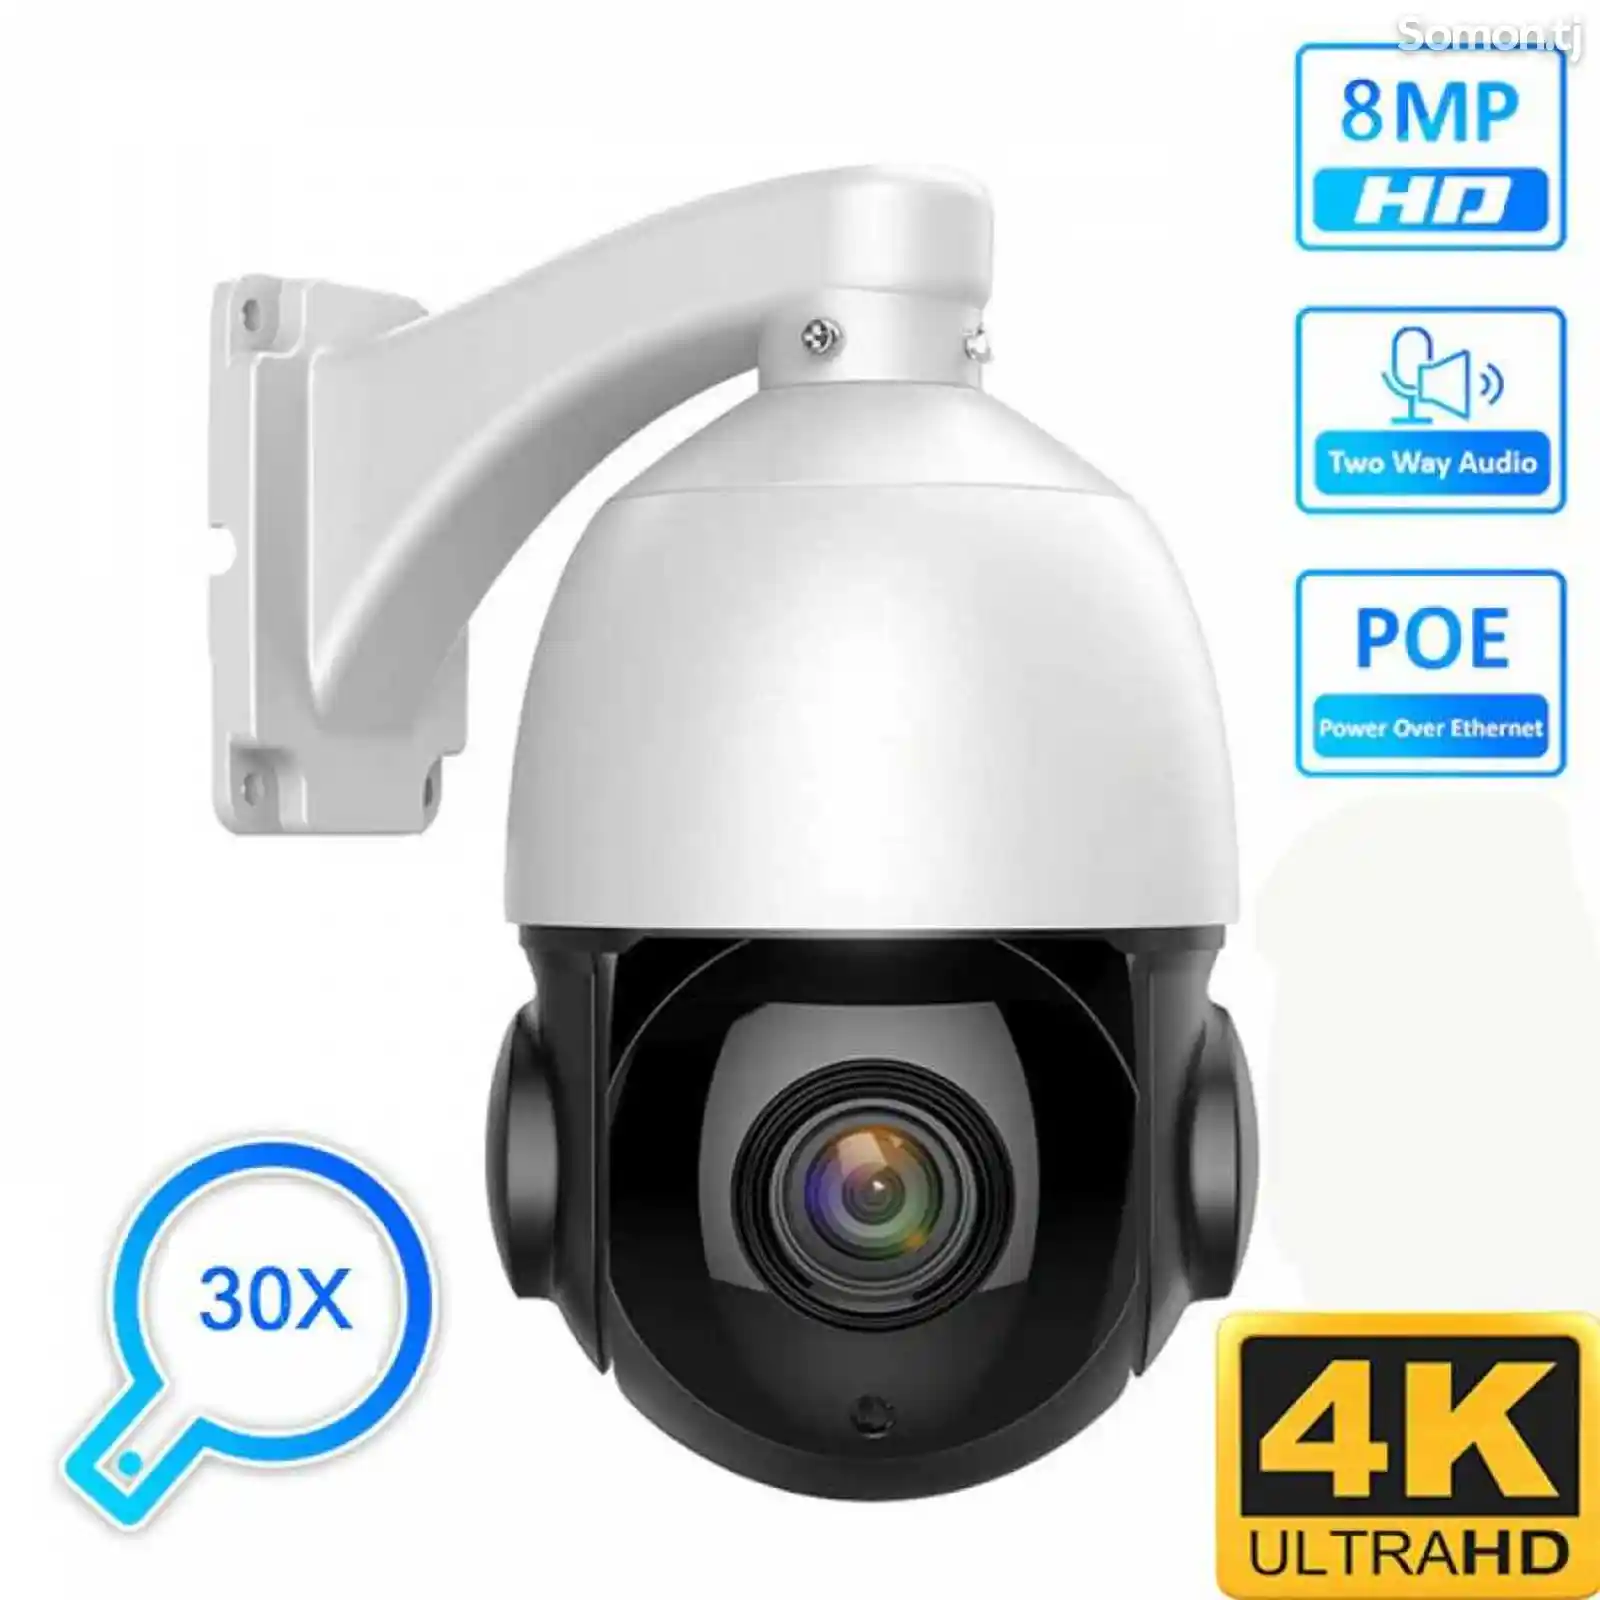 Установка и настройка камер видеонаблюдения-4